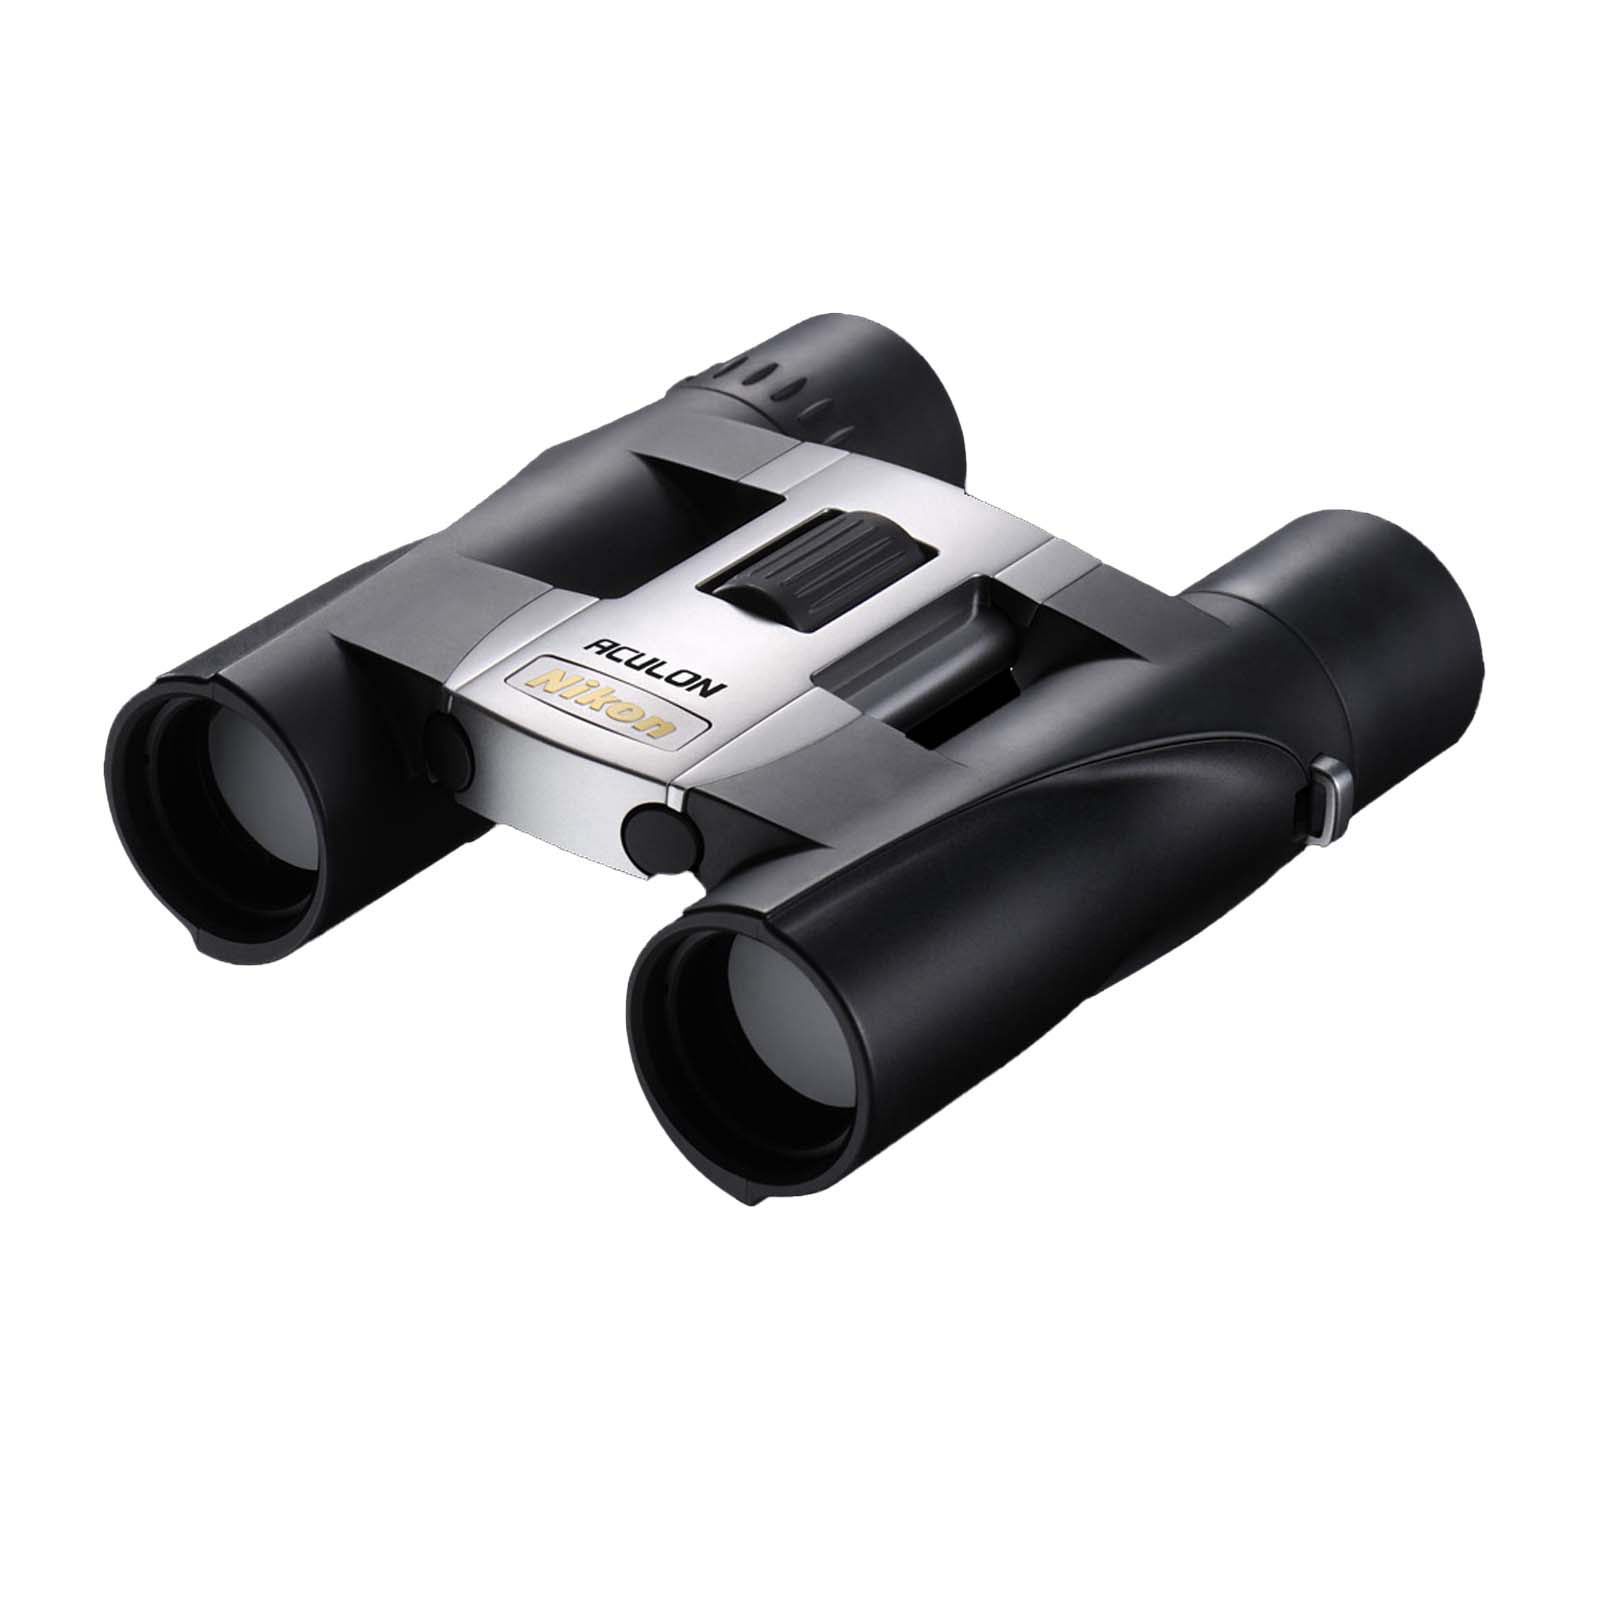 Nikon Aculon A30 10X25 Binoculars - Silver